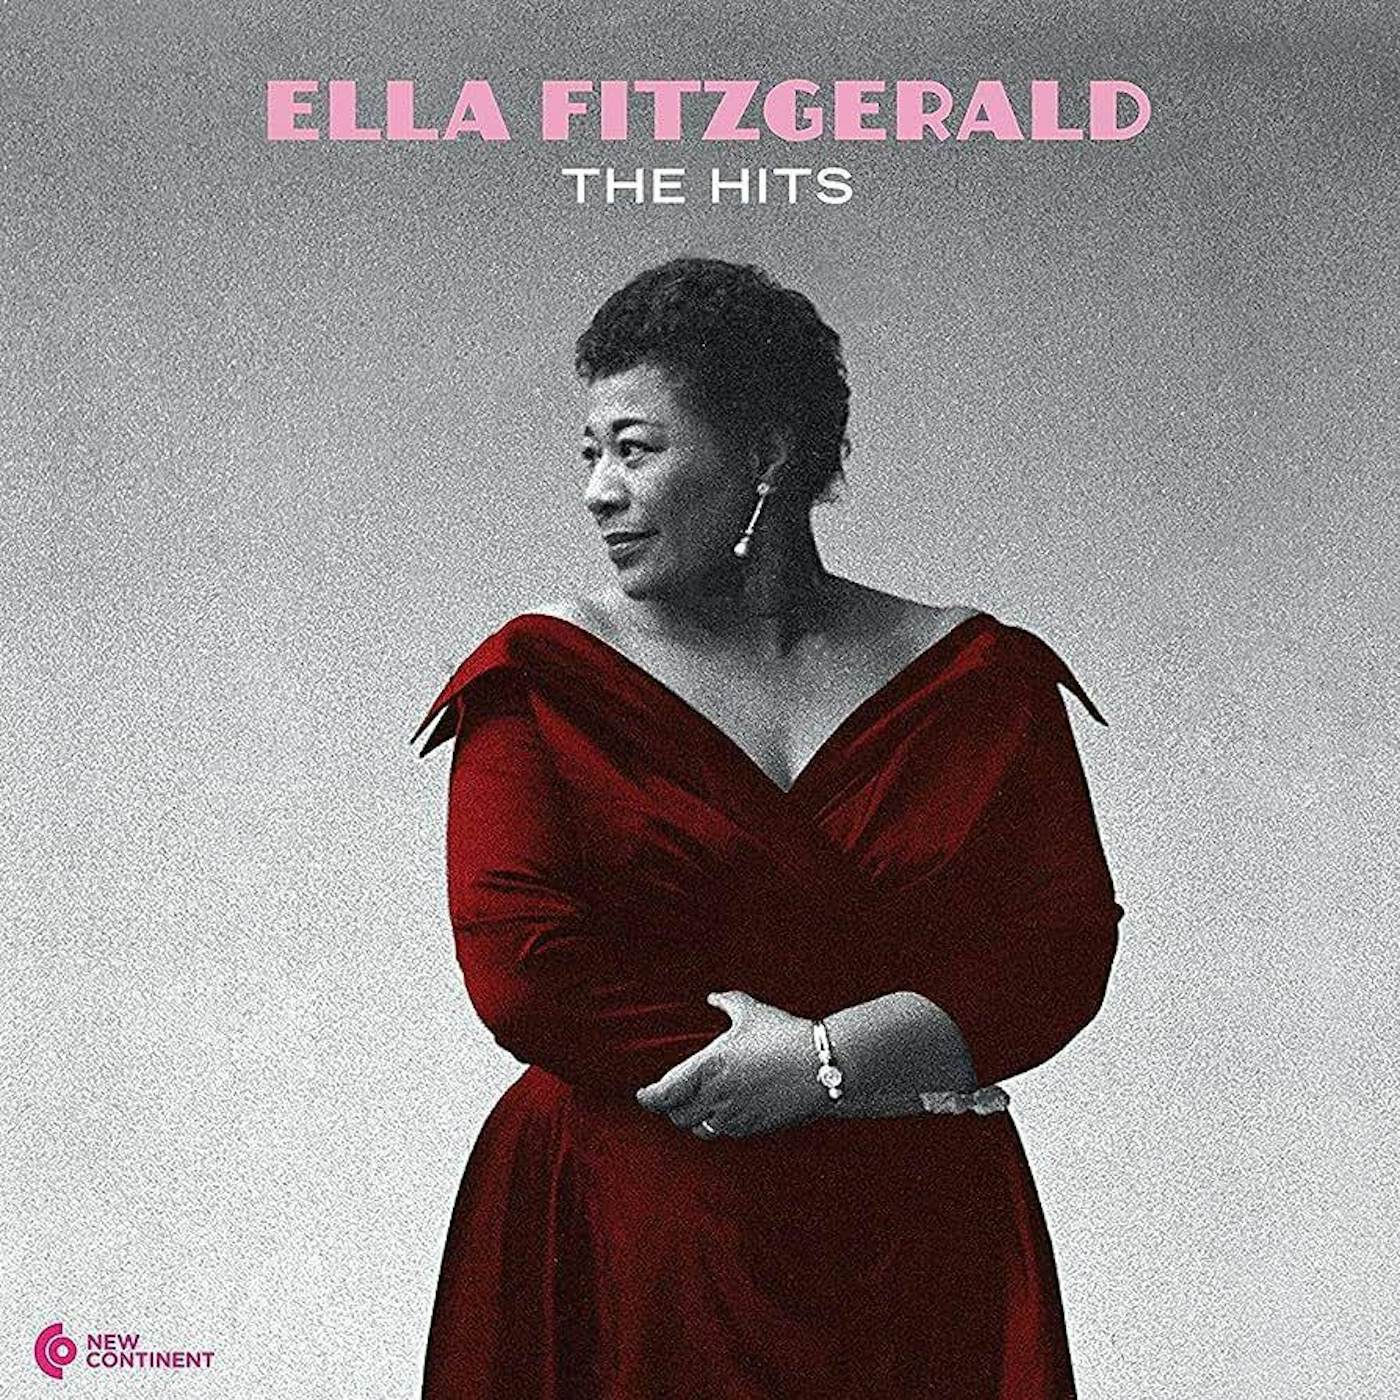 Ella Fitzgerald LP Vinyl Record - The Hits (Limited Collector's Editiion)